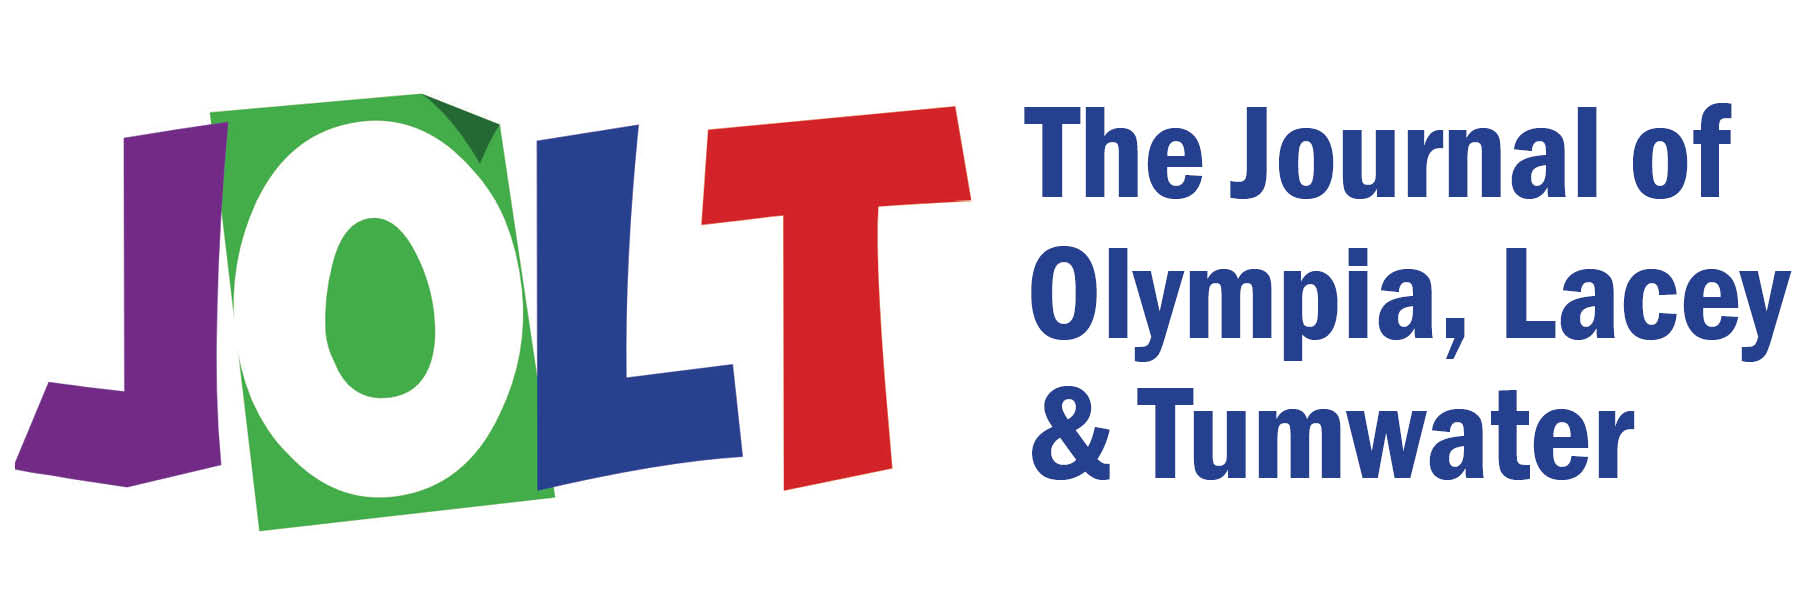 The JOLT News Organization logo